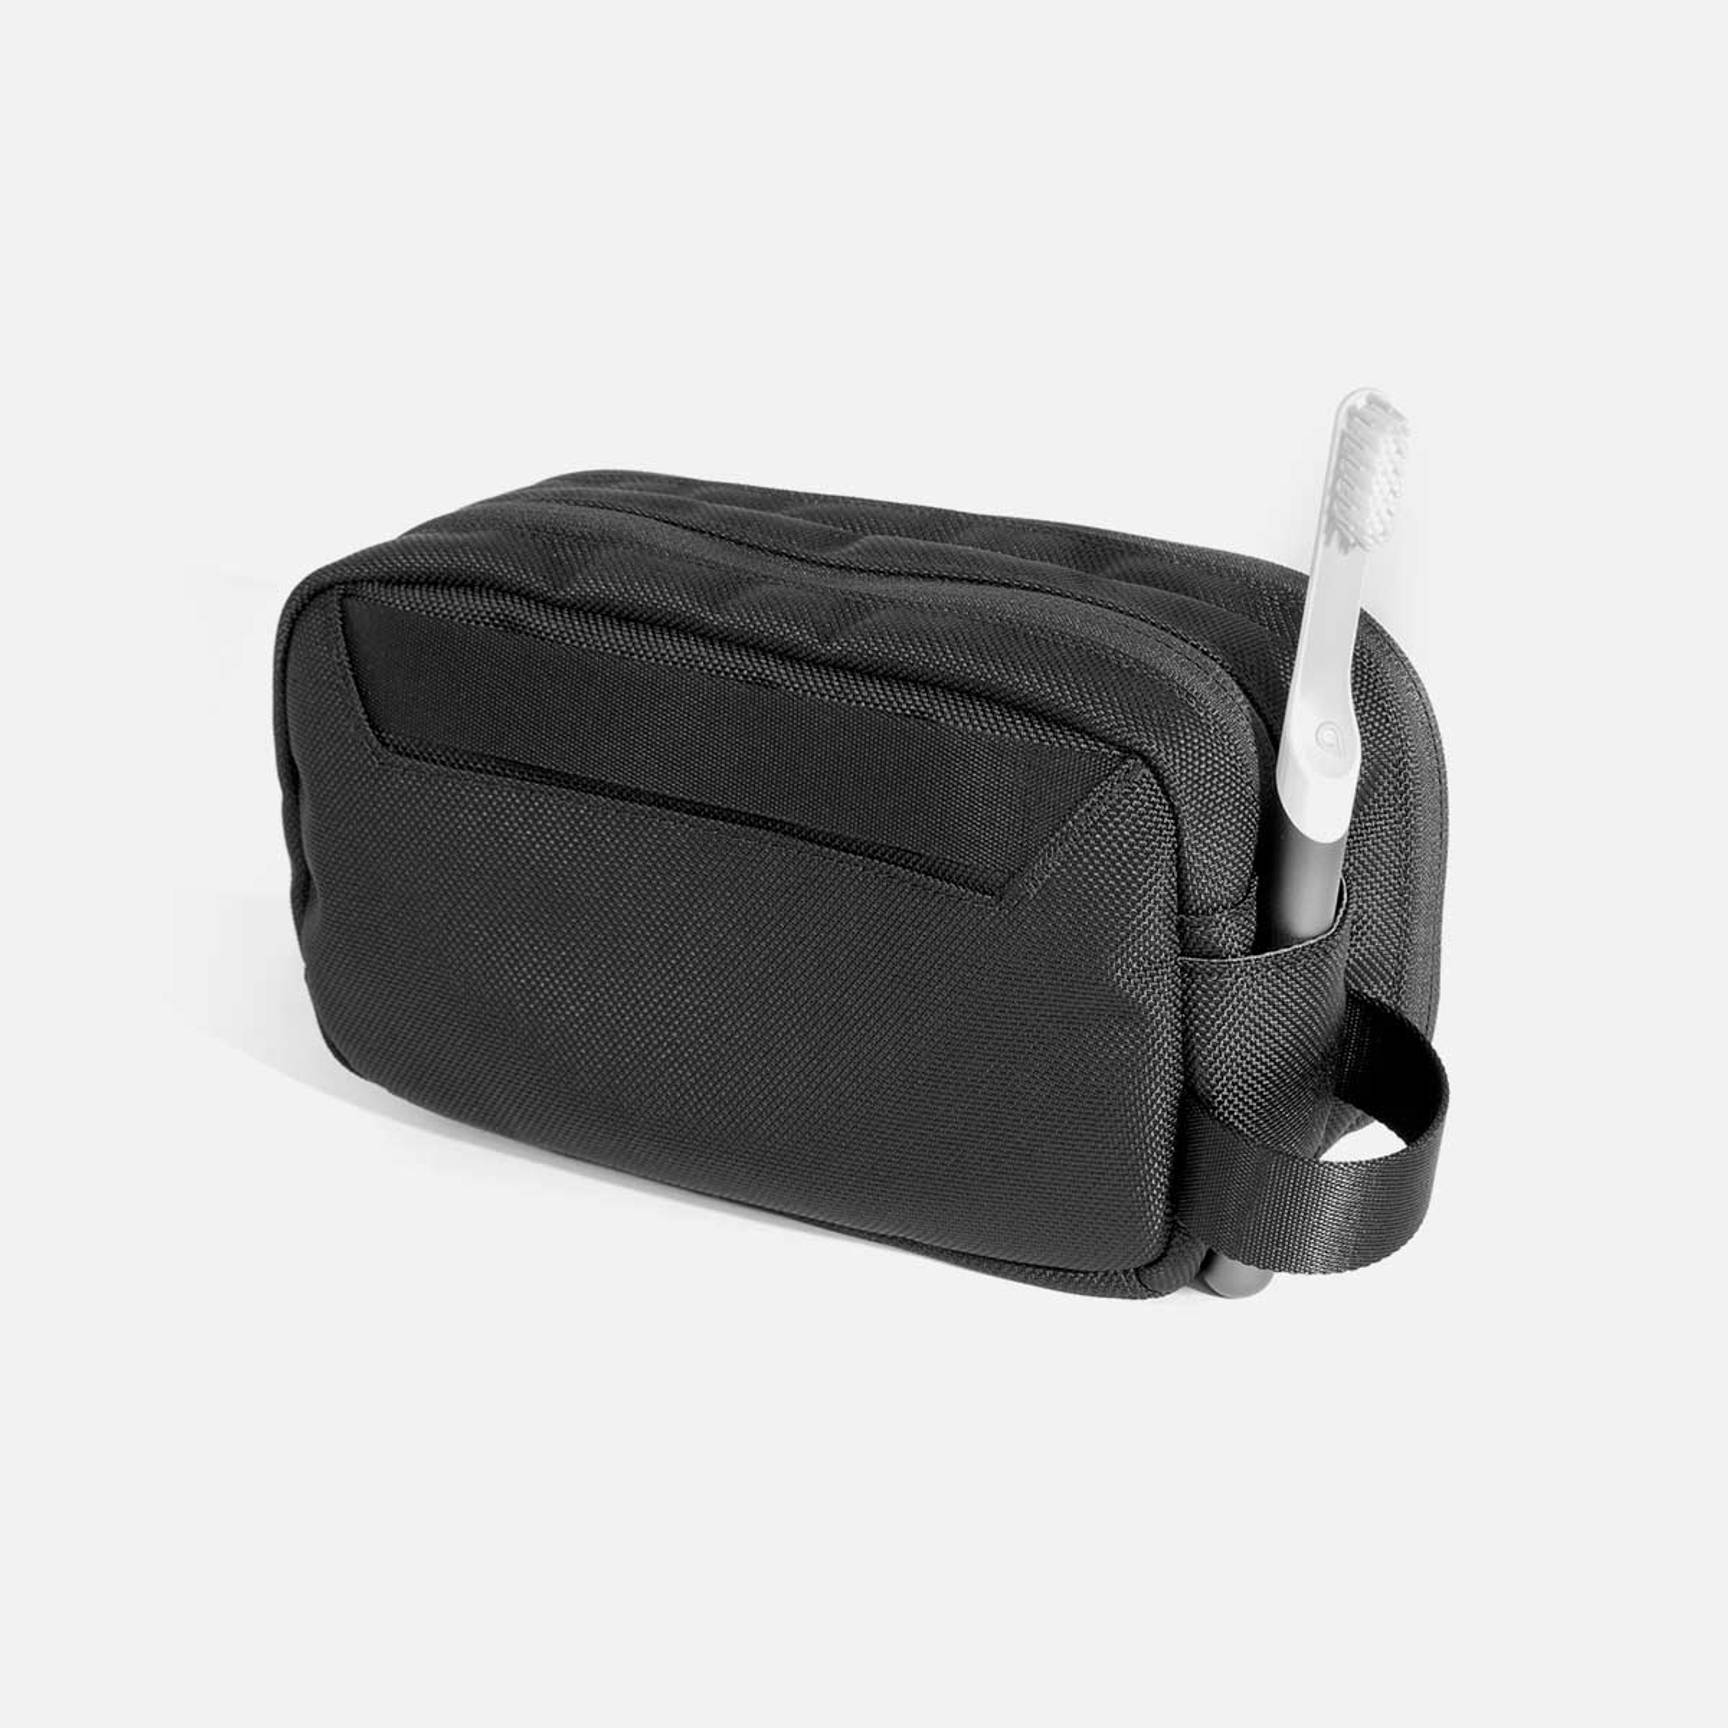 Aer City Sling - Black, Packing Cubes & Dopp Kits